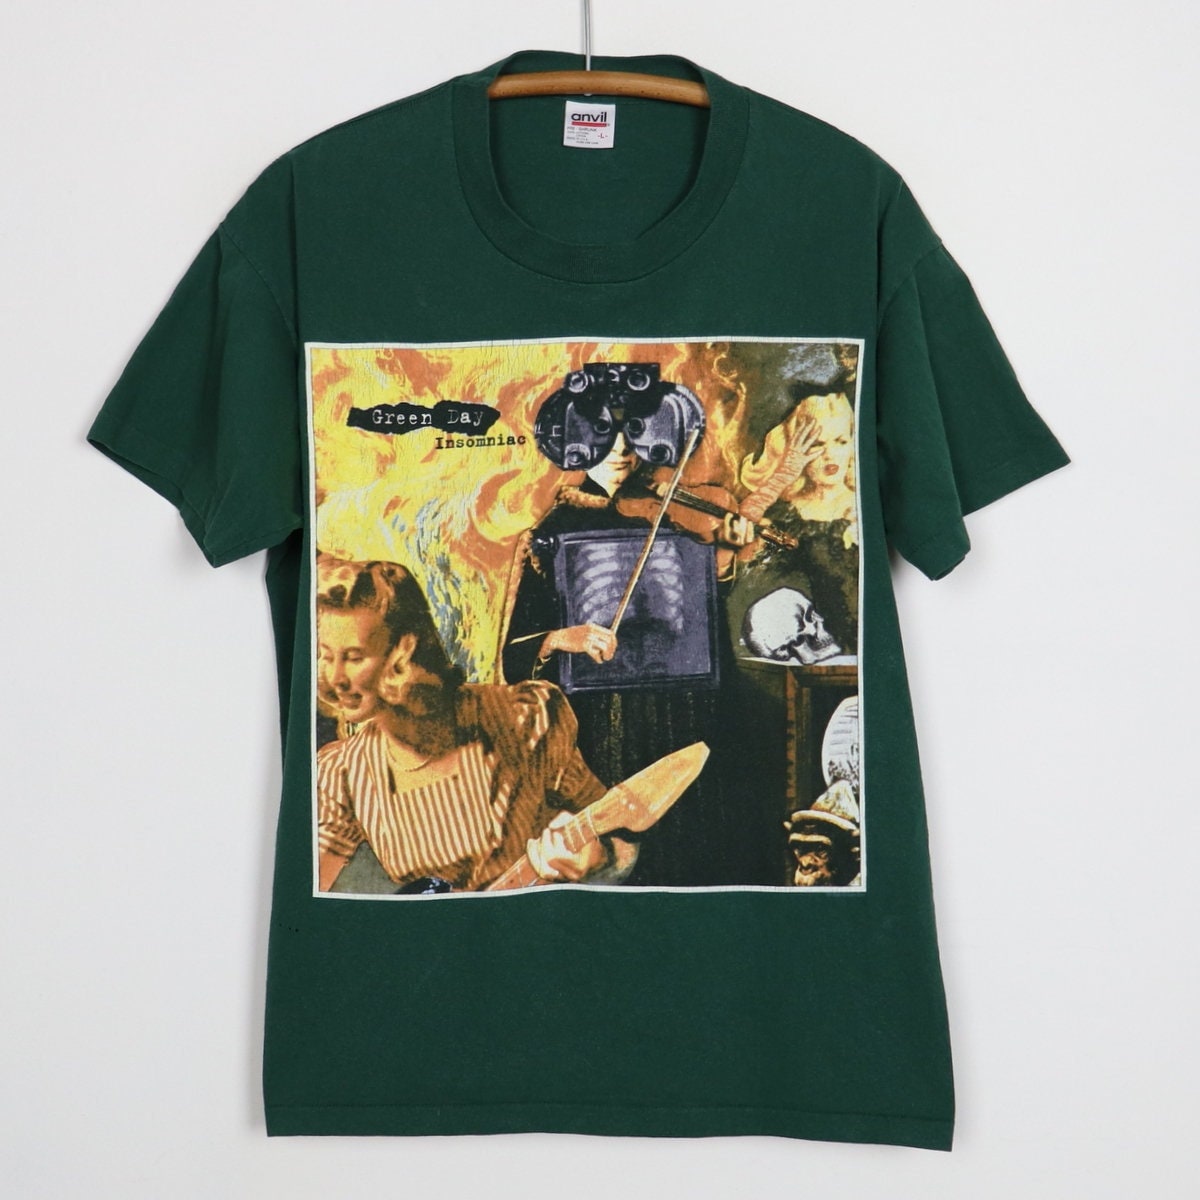 Vintage 1995 green day insomniac tour shirt - Etsy 日本